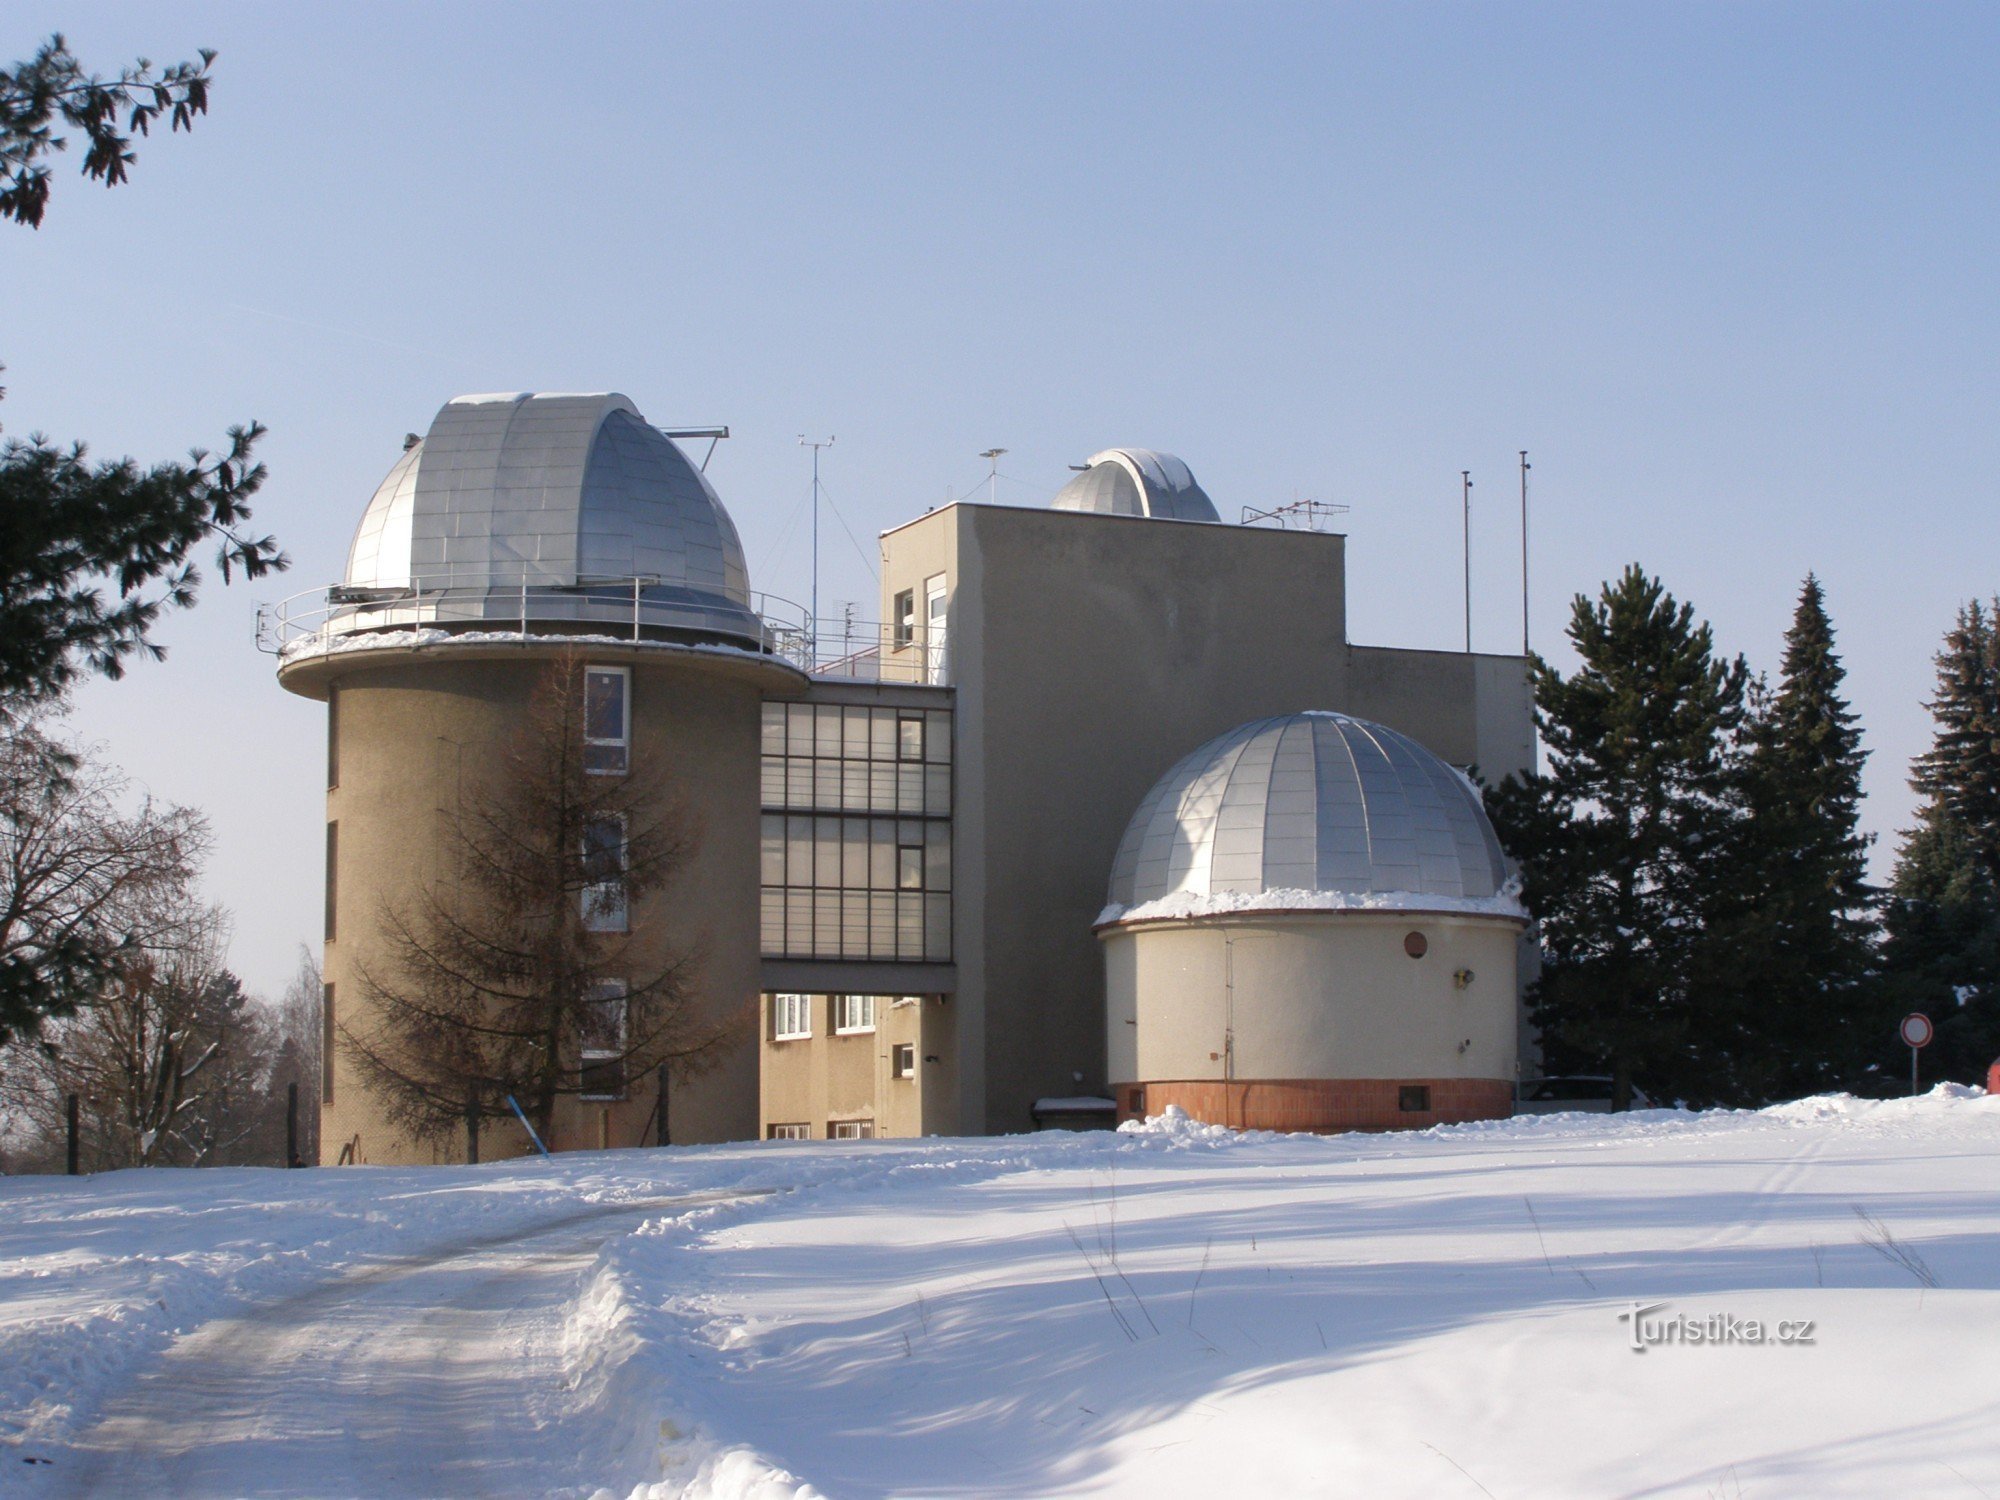 Hradec Králové - observatorium och planetarium